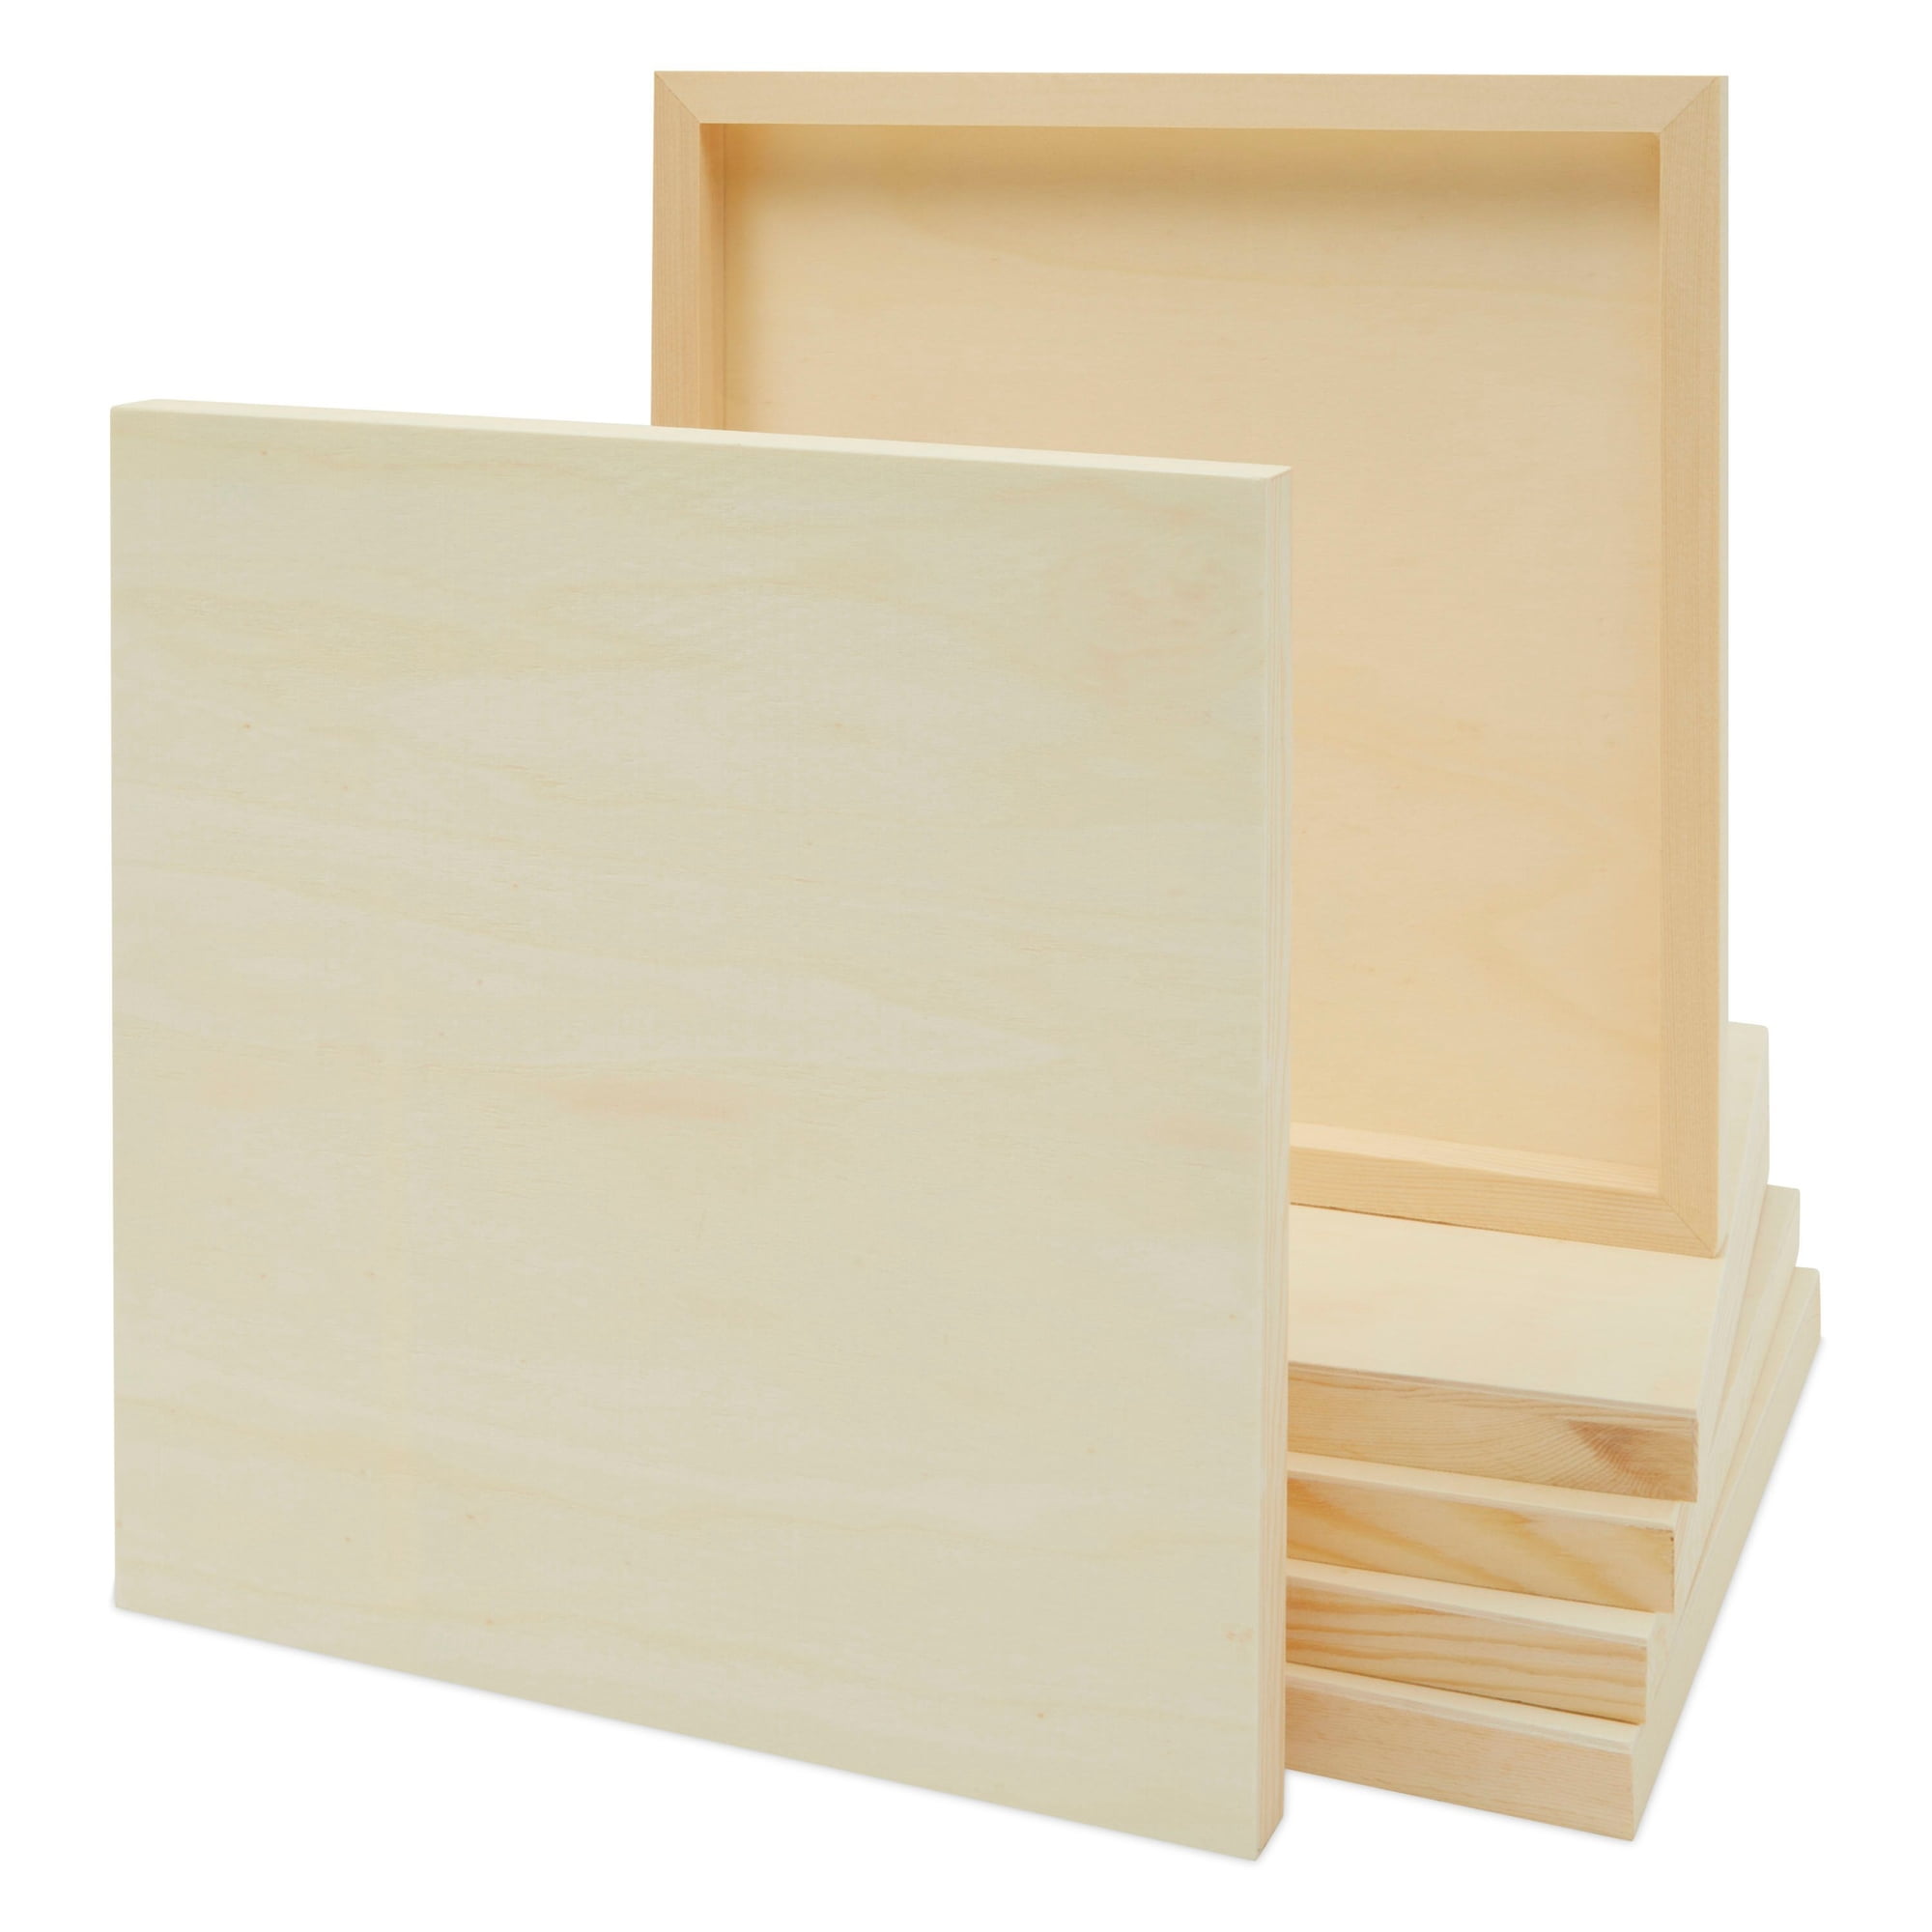 Buy Canvas Boards & Wooden Panels Online